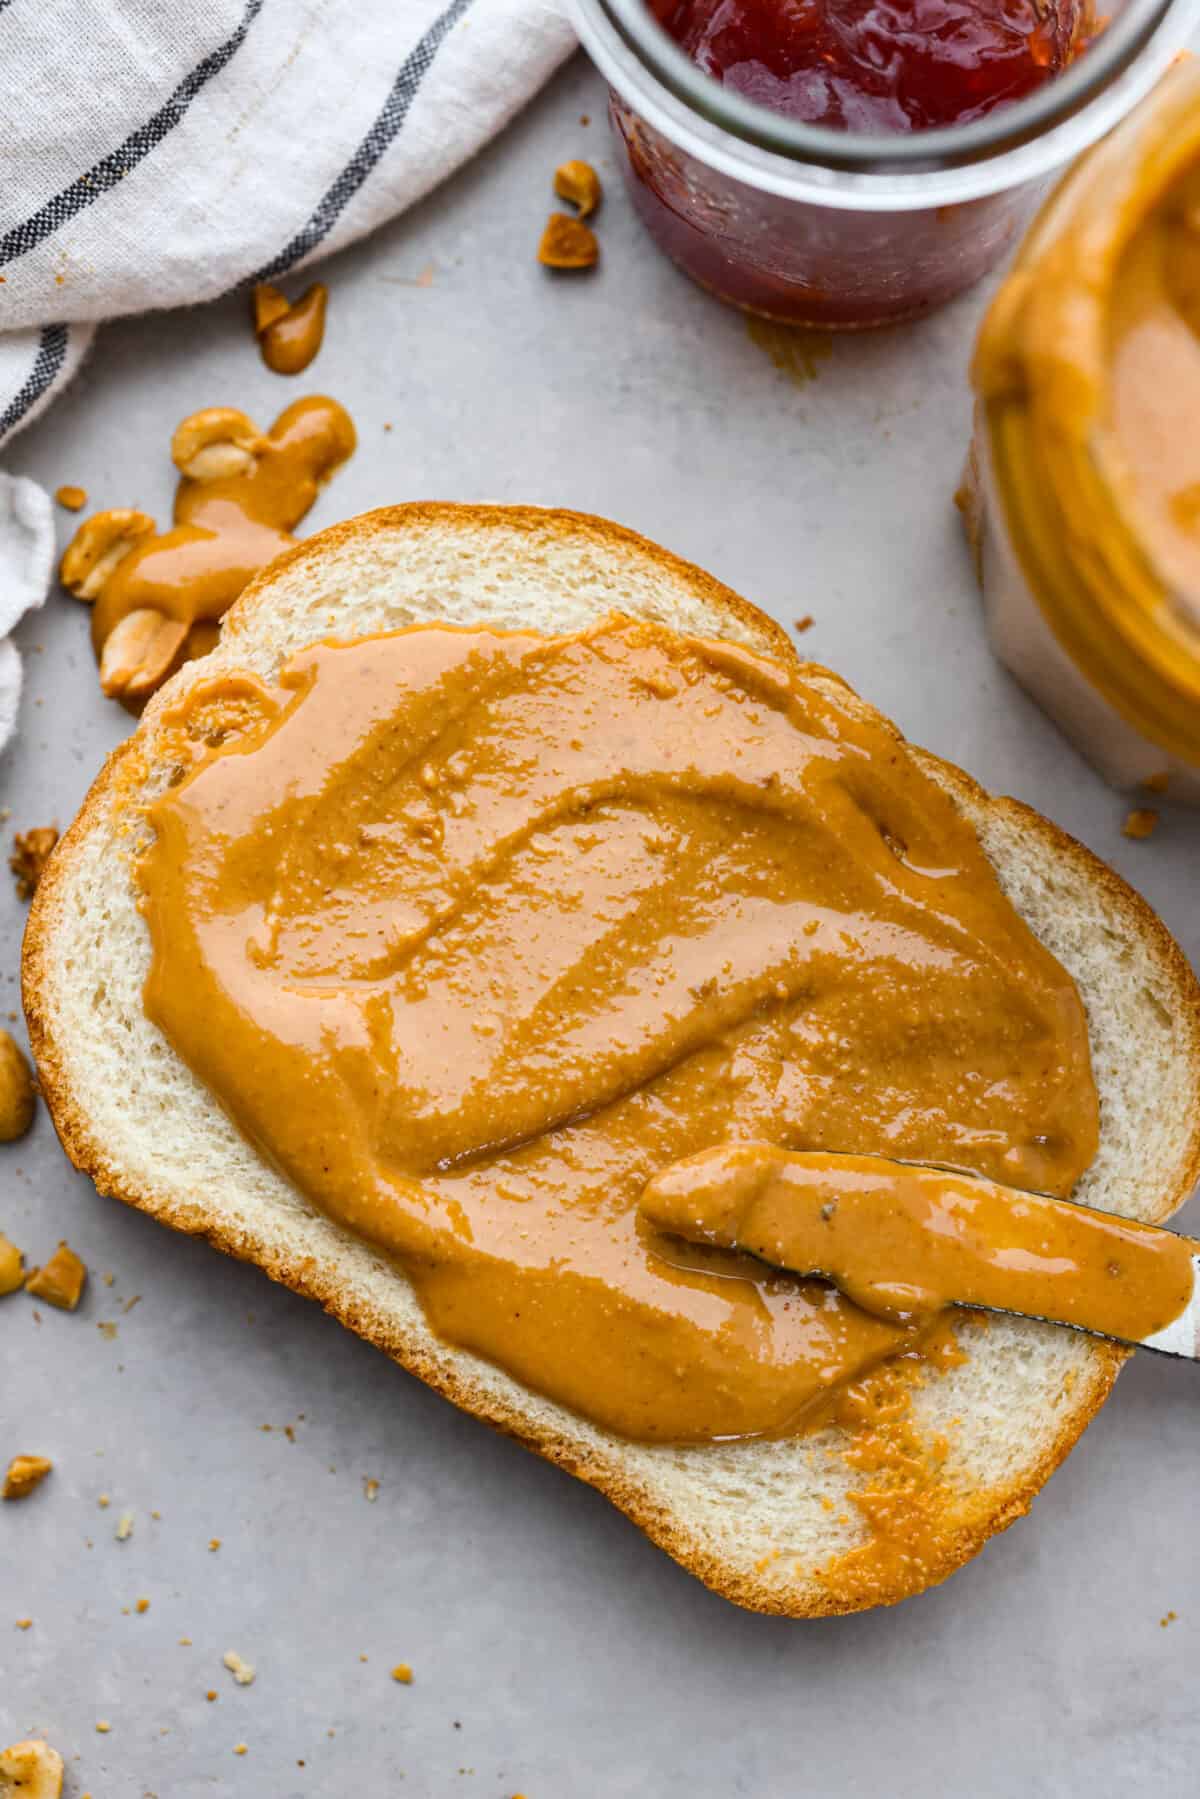 Peanut butter spread over a piece of bread.